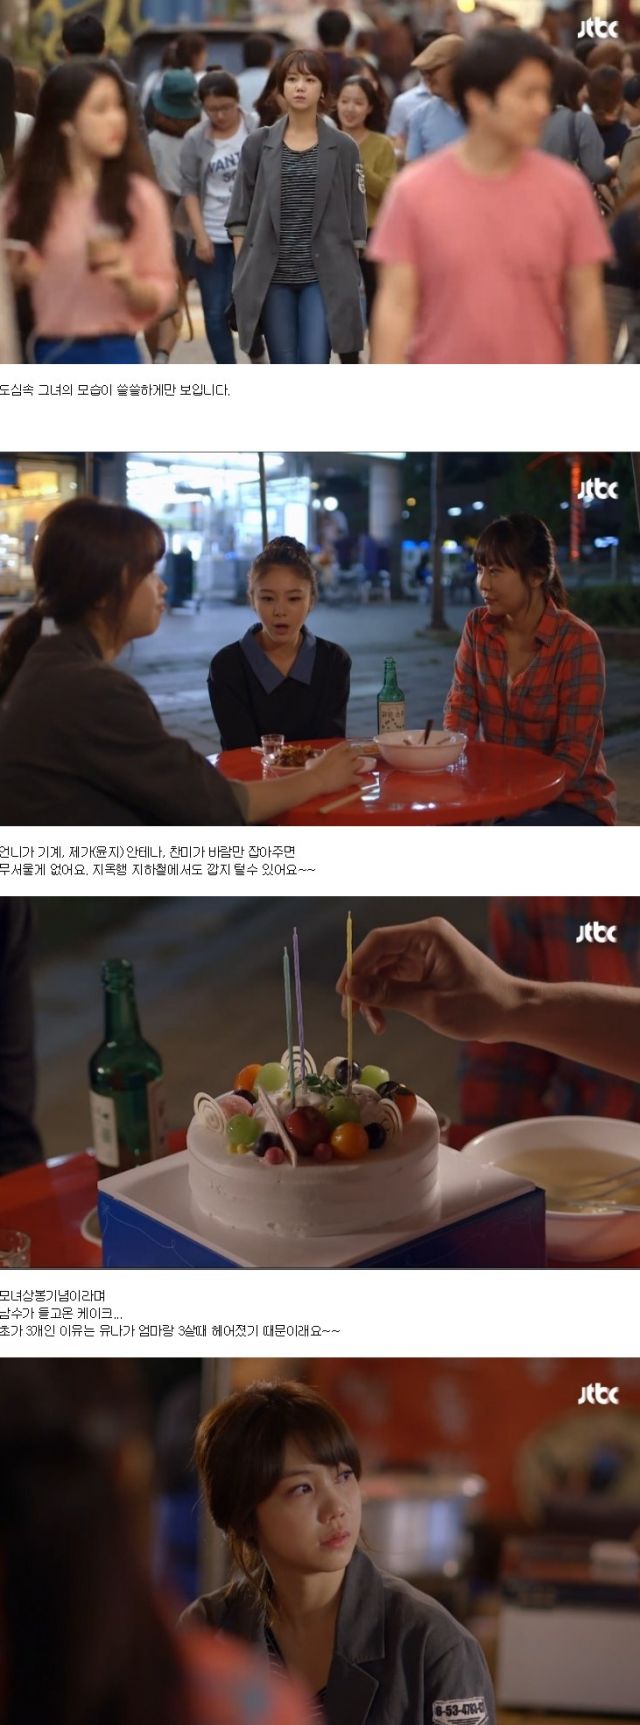 episode 35 captures for the Korean drama 'Yuna's Street'